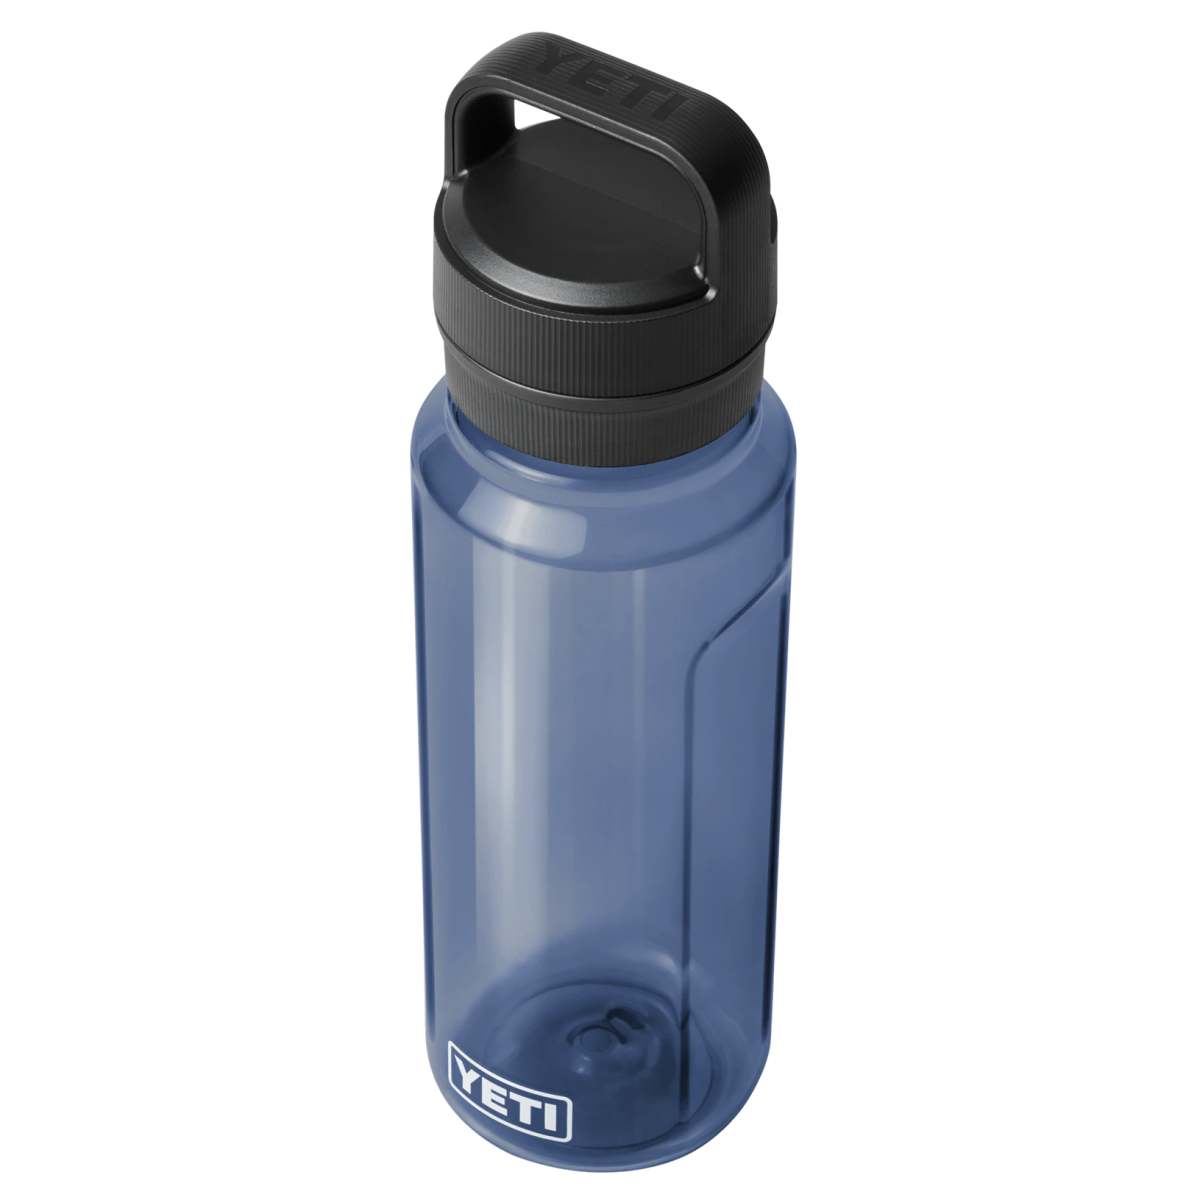 YETI👀Rambler 18oz Bottle with Matching Straw Cap- ￼Reef Blue Brand New